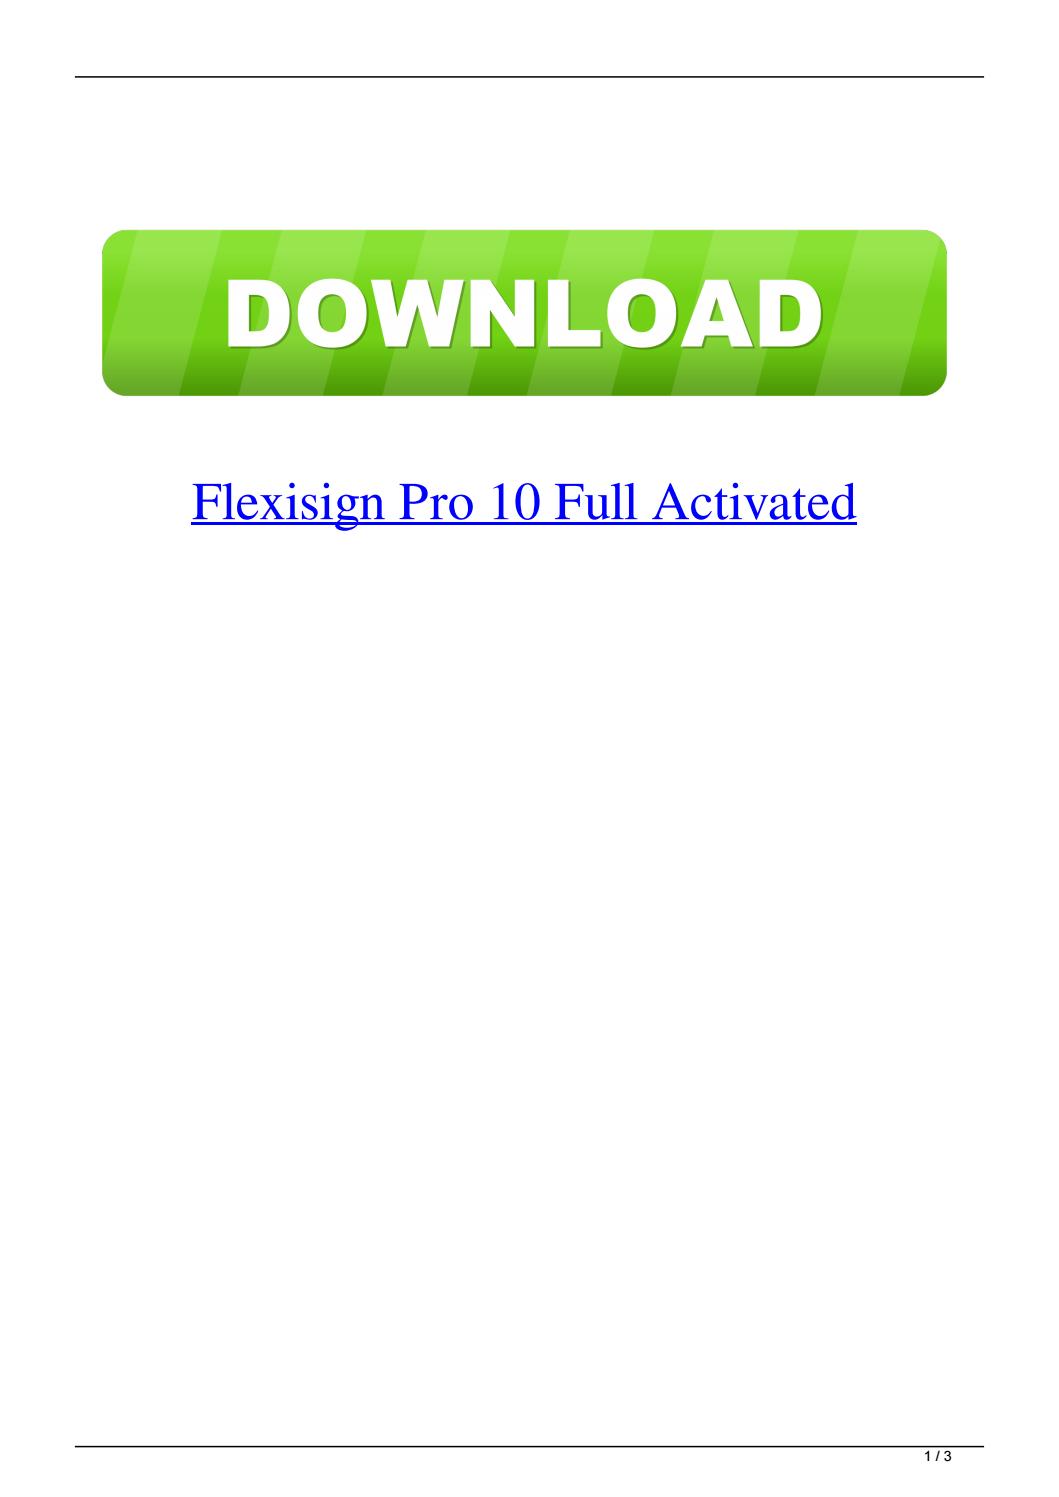 flexisign pro download